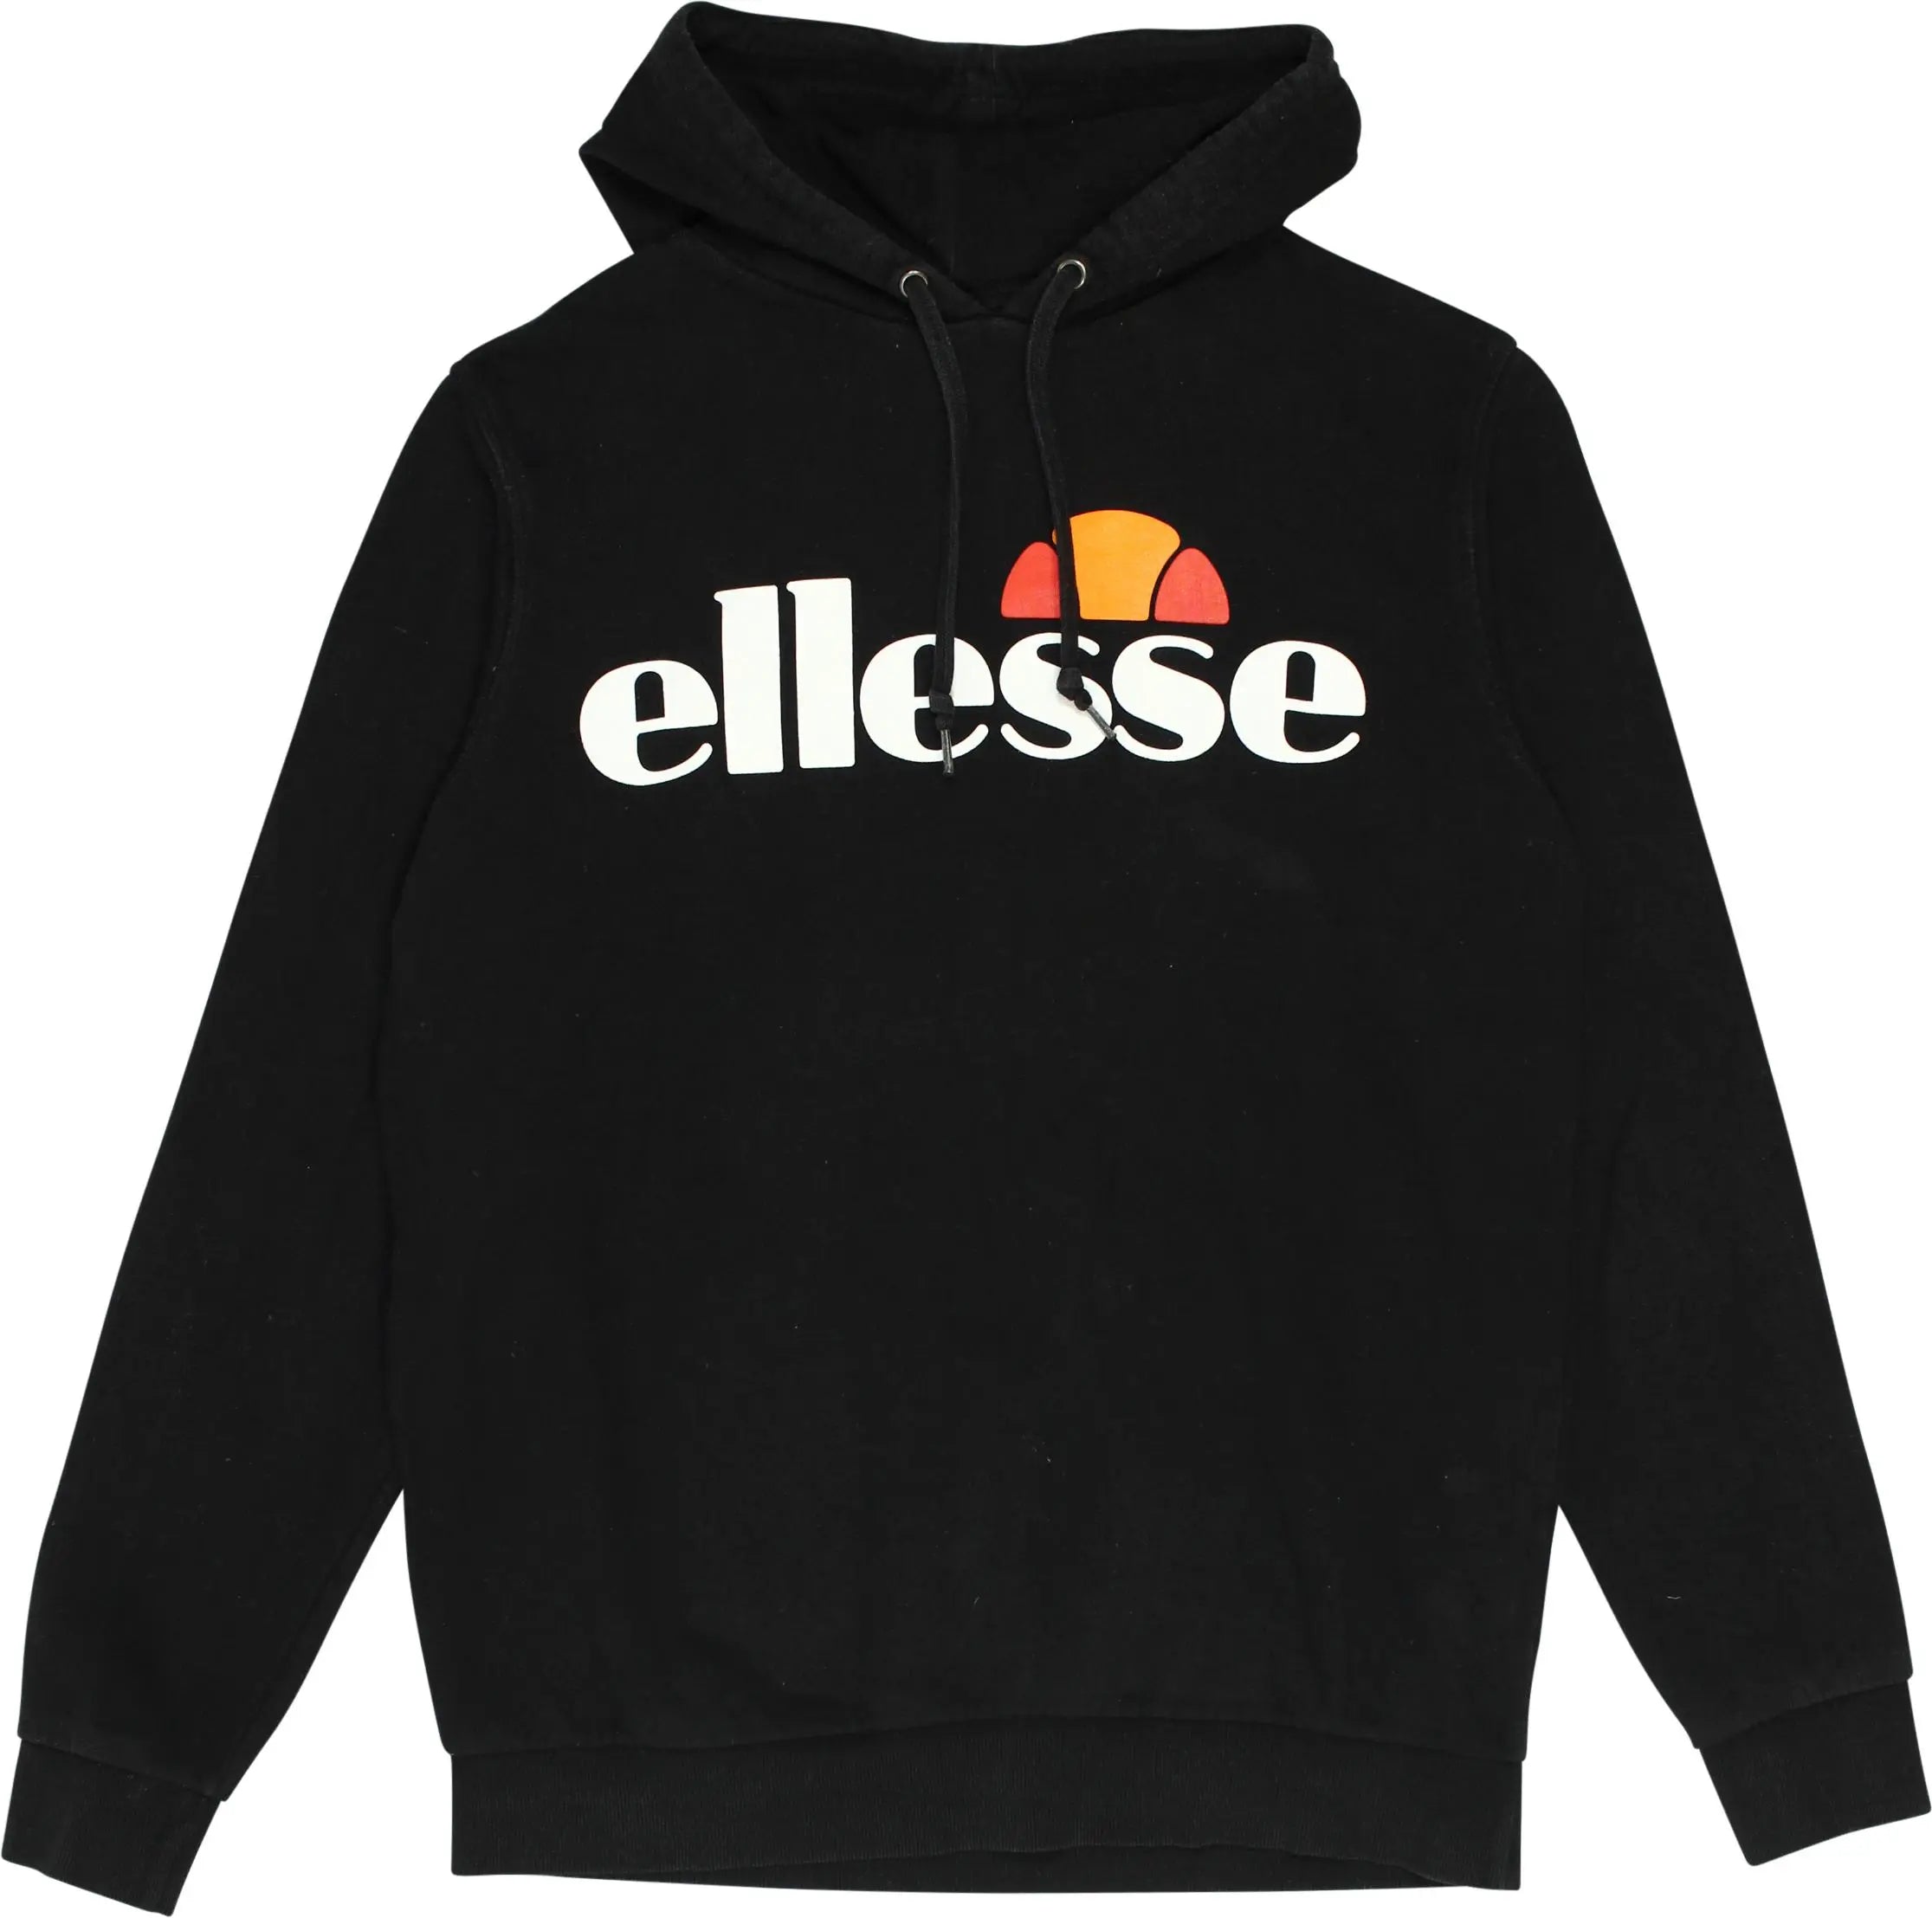 Ellesse - Ellesse Black Hoodie- ThriftTale.com - Vintage and second handclothing